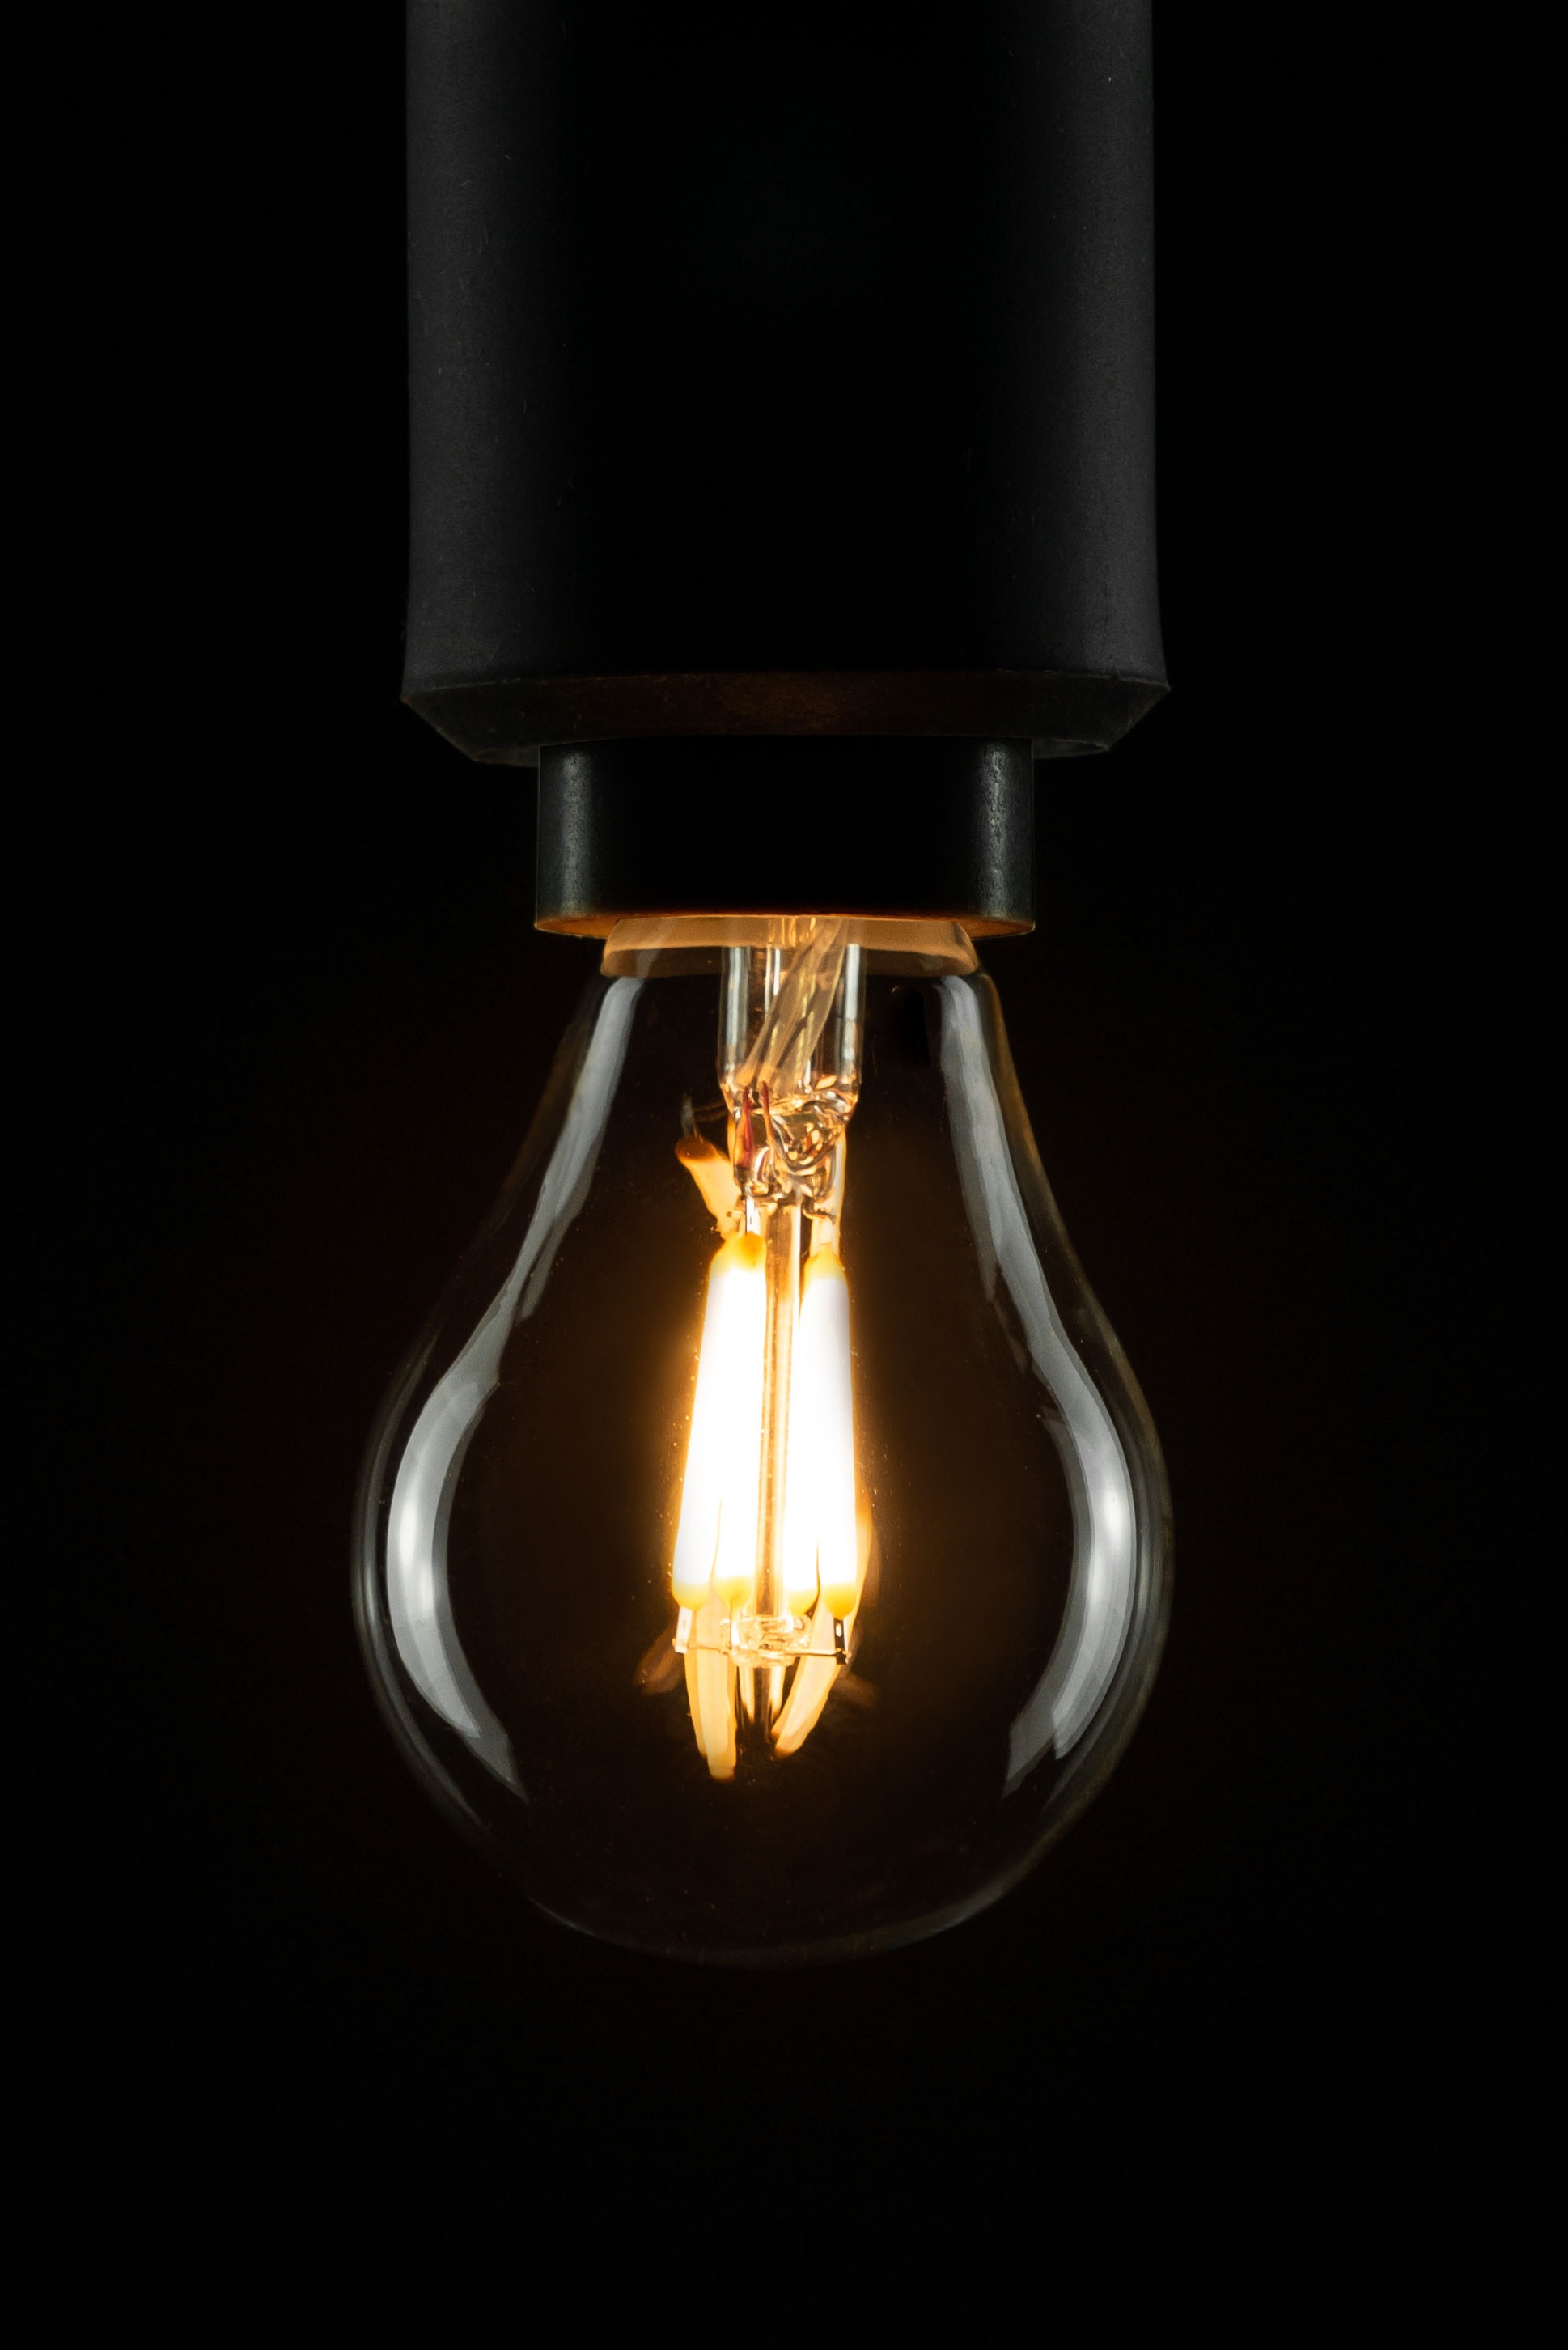 SEGULA LED-Leuchtmittel »Vintage Line«, E14, 1 St., Warmweiß, dimmbar, Tropfenlampe klar, E14